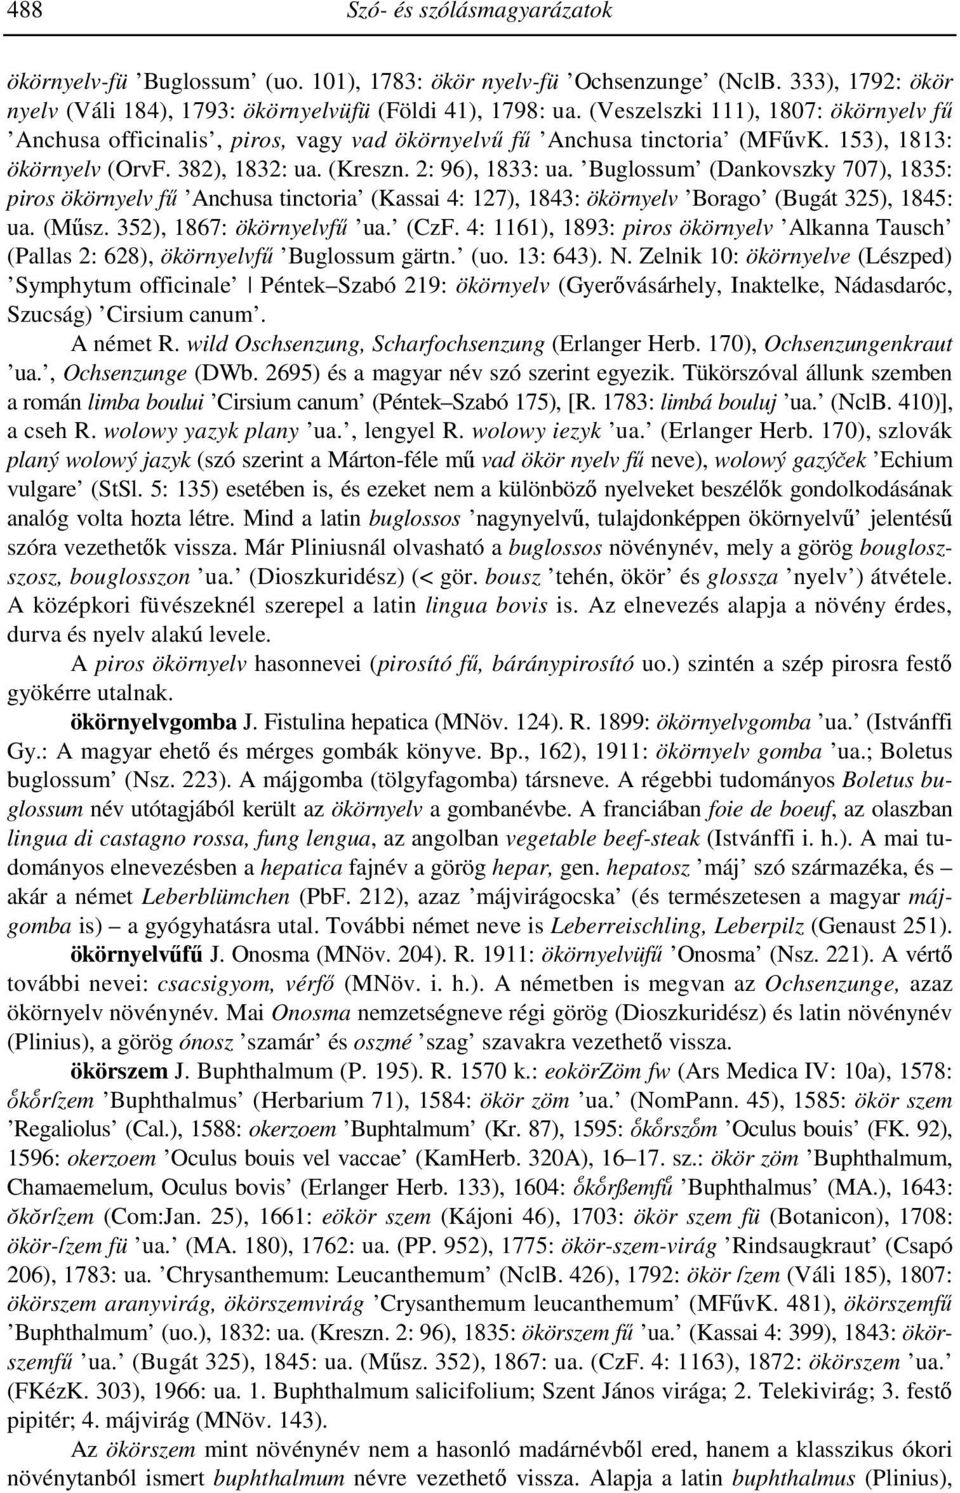 Buglossum (Dankovszky 707), 1835: piros ökörnyelv fő Anchusa tinctoria (Kassai 4: 127), 1843: ökörnyelv Borago (Bugát 325), 1845: ua. (Mősz. 352), 1867: ökörnyelvfő ua. (CzF.